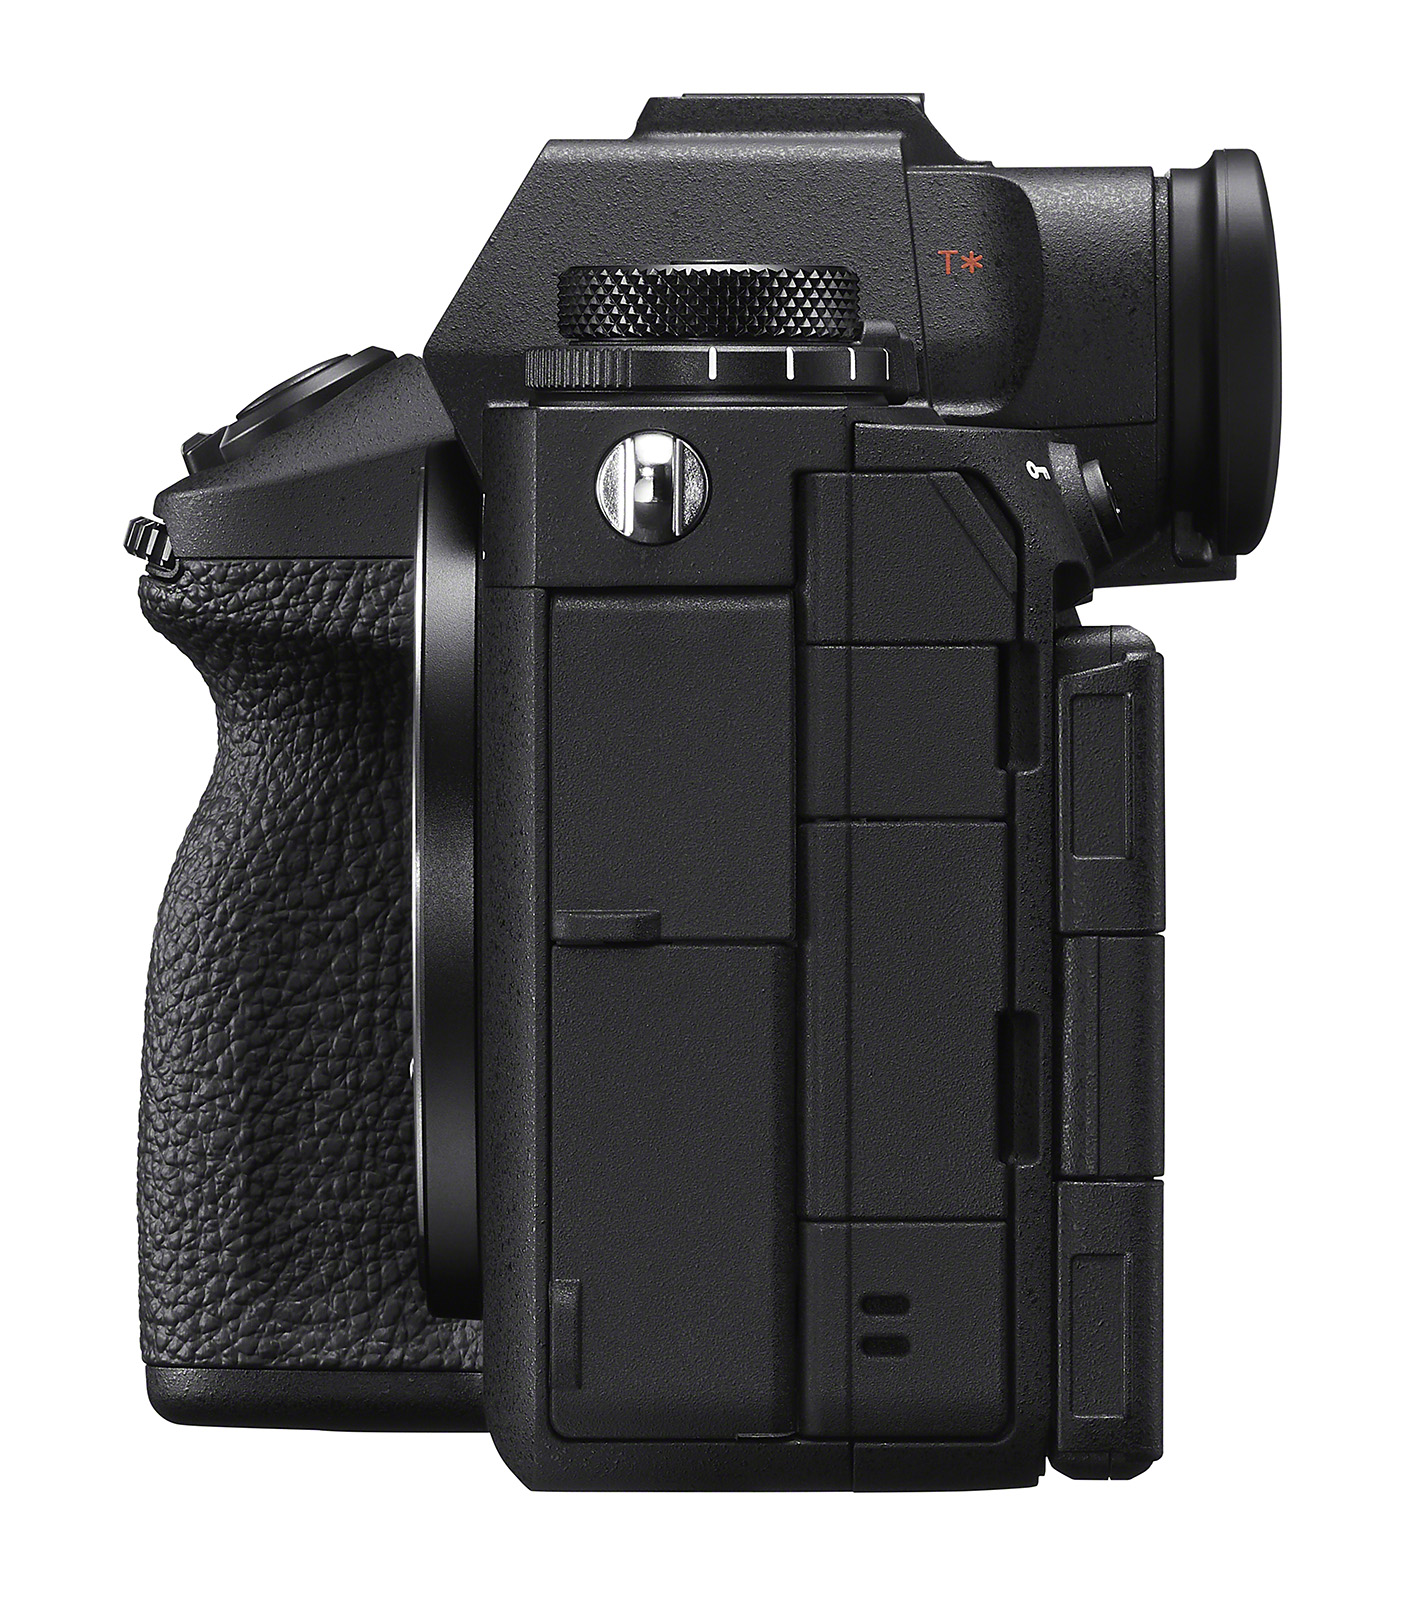 Sony Alpha 9 III (α9 III) camera